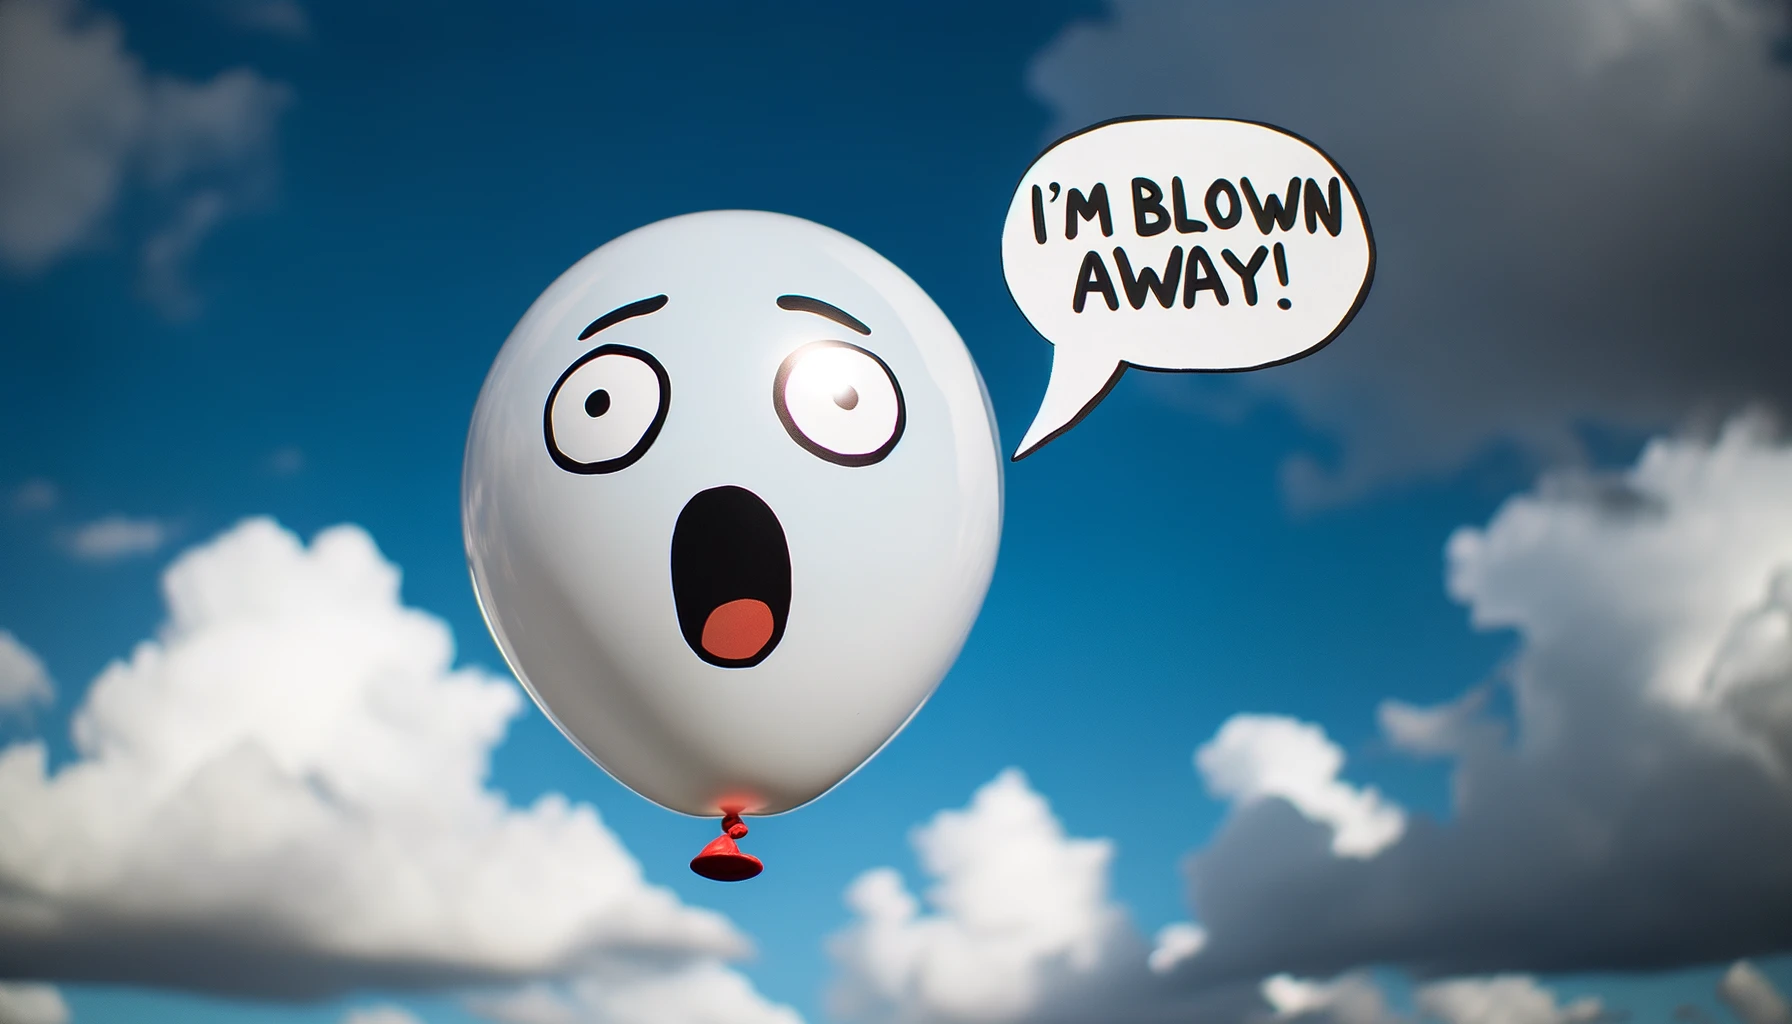 I'm blown away - Balloon Pun